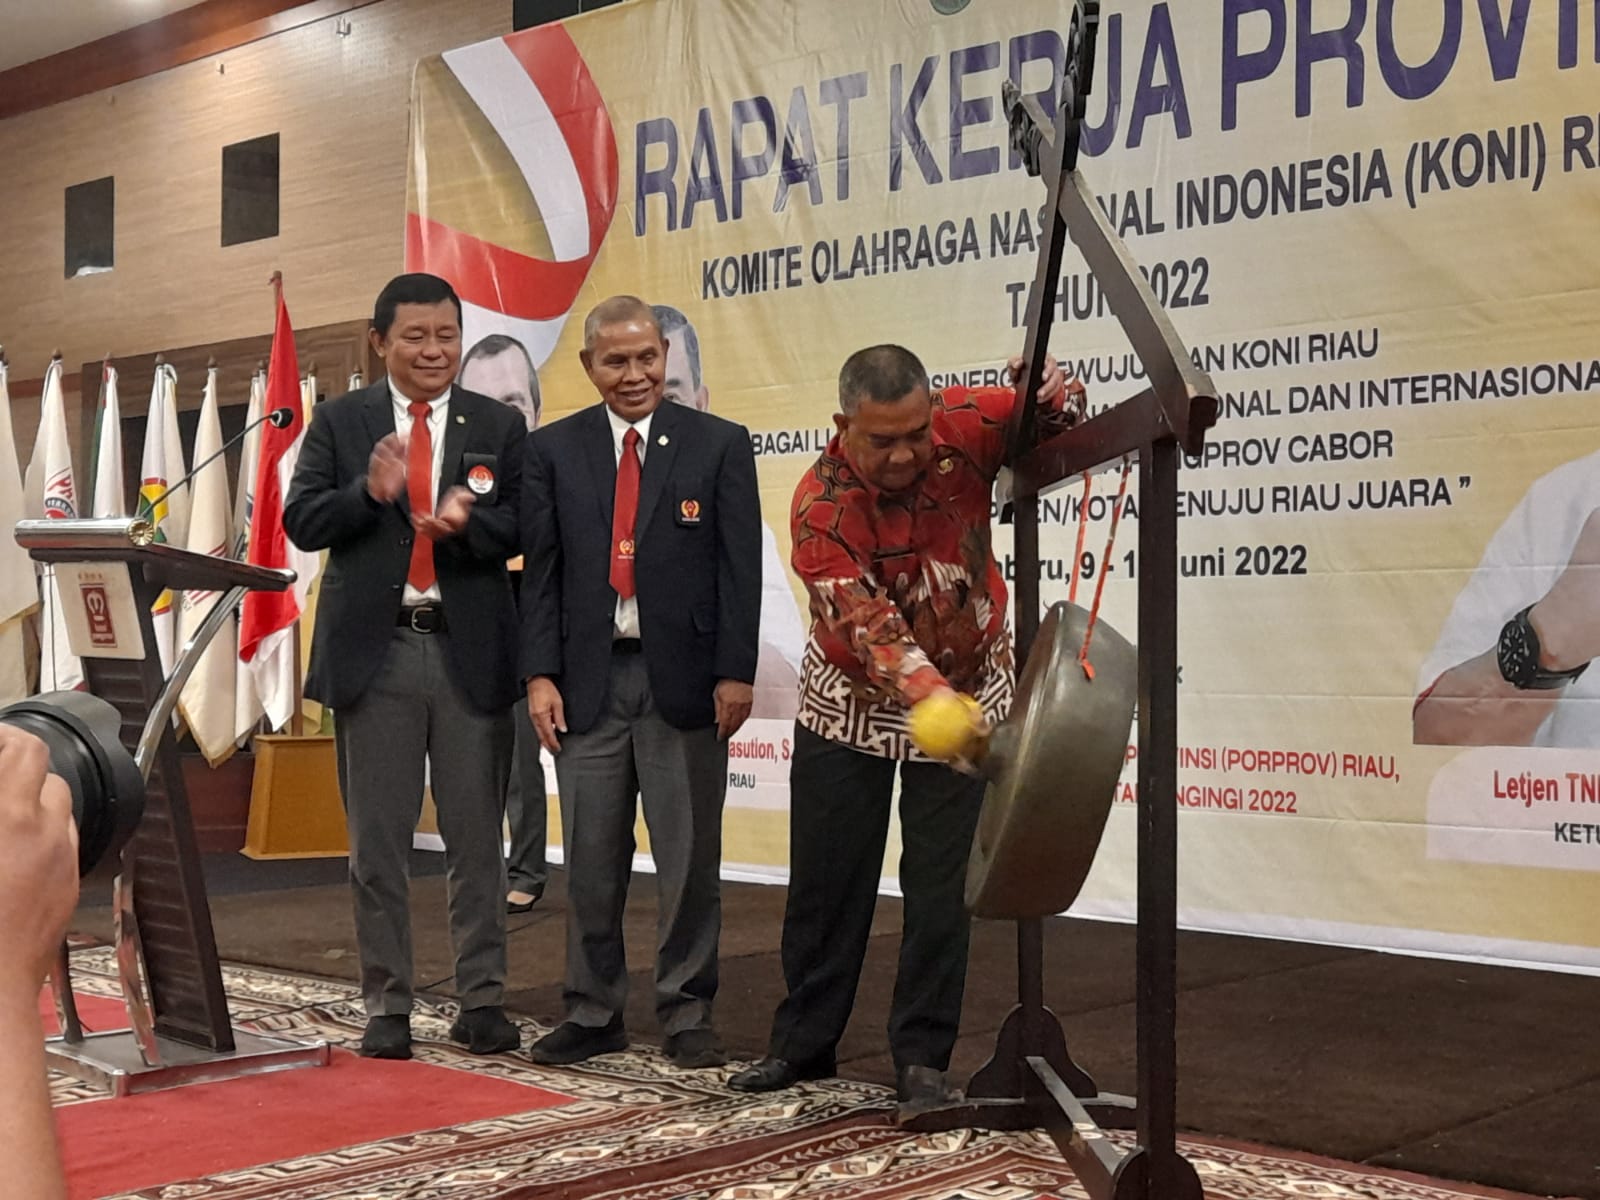 Dari Pembukaan Rakerprov KONI Riau, Ini Pesan Penting Wagubri untuk  KONI Riau